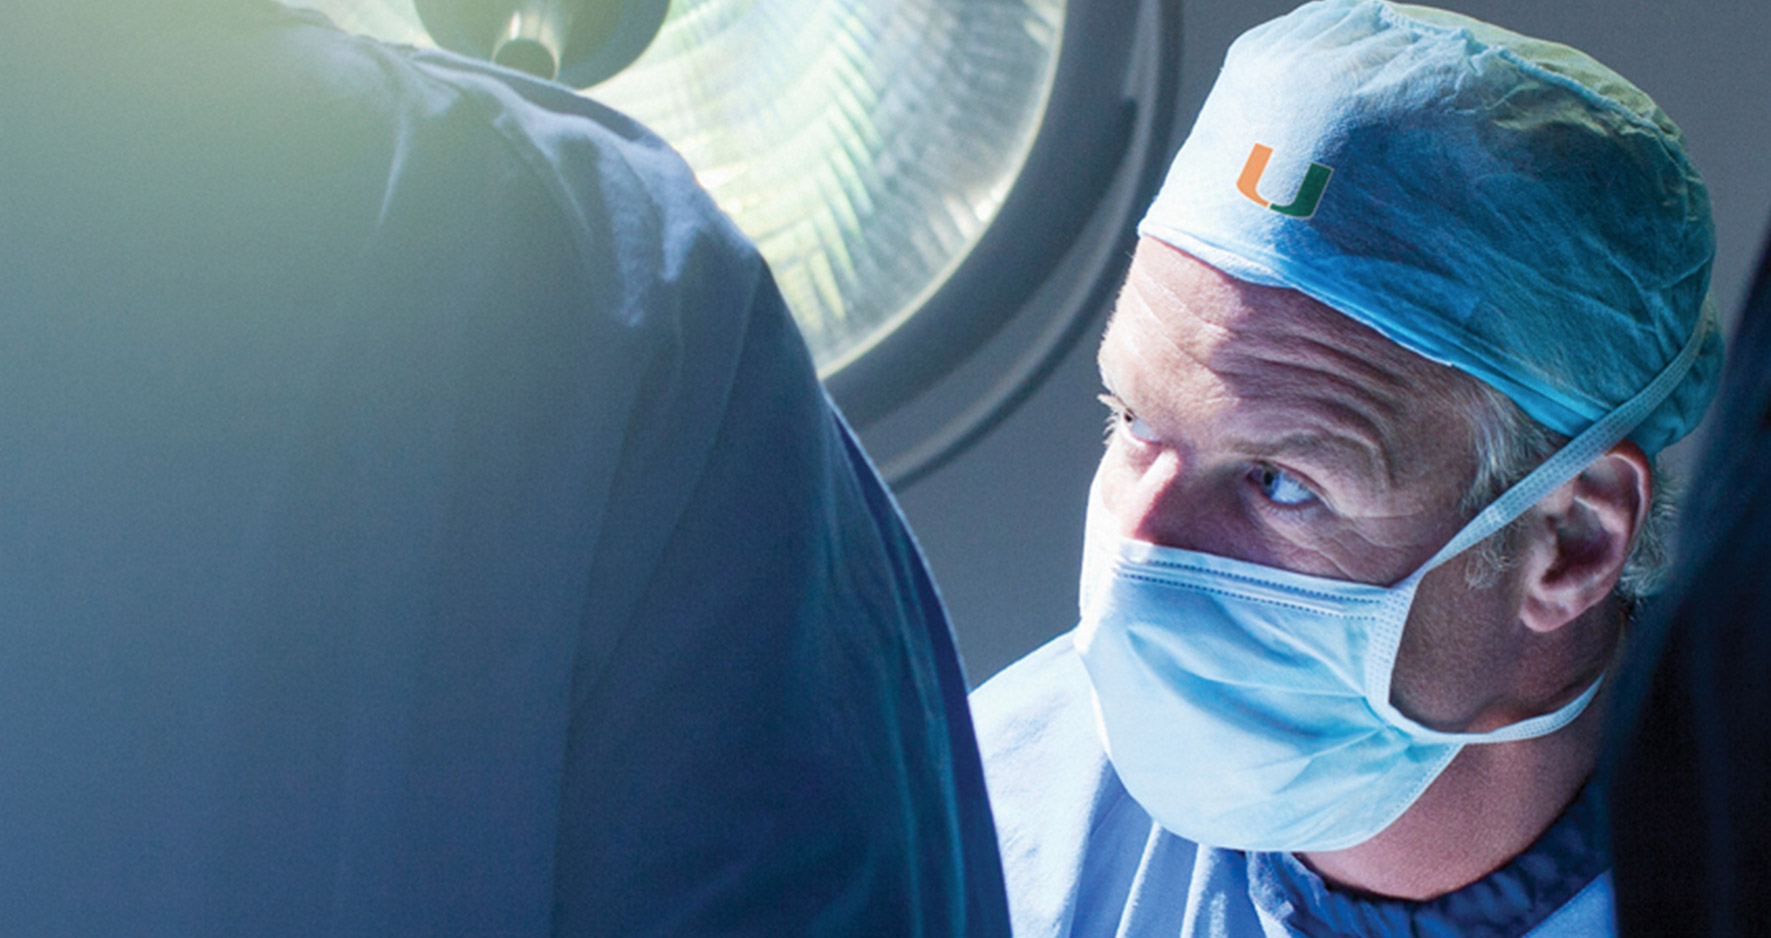 Vascular surgeons operating